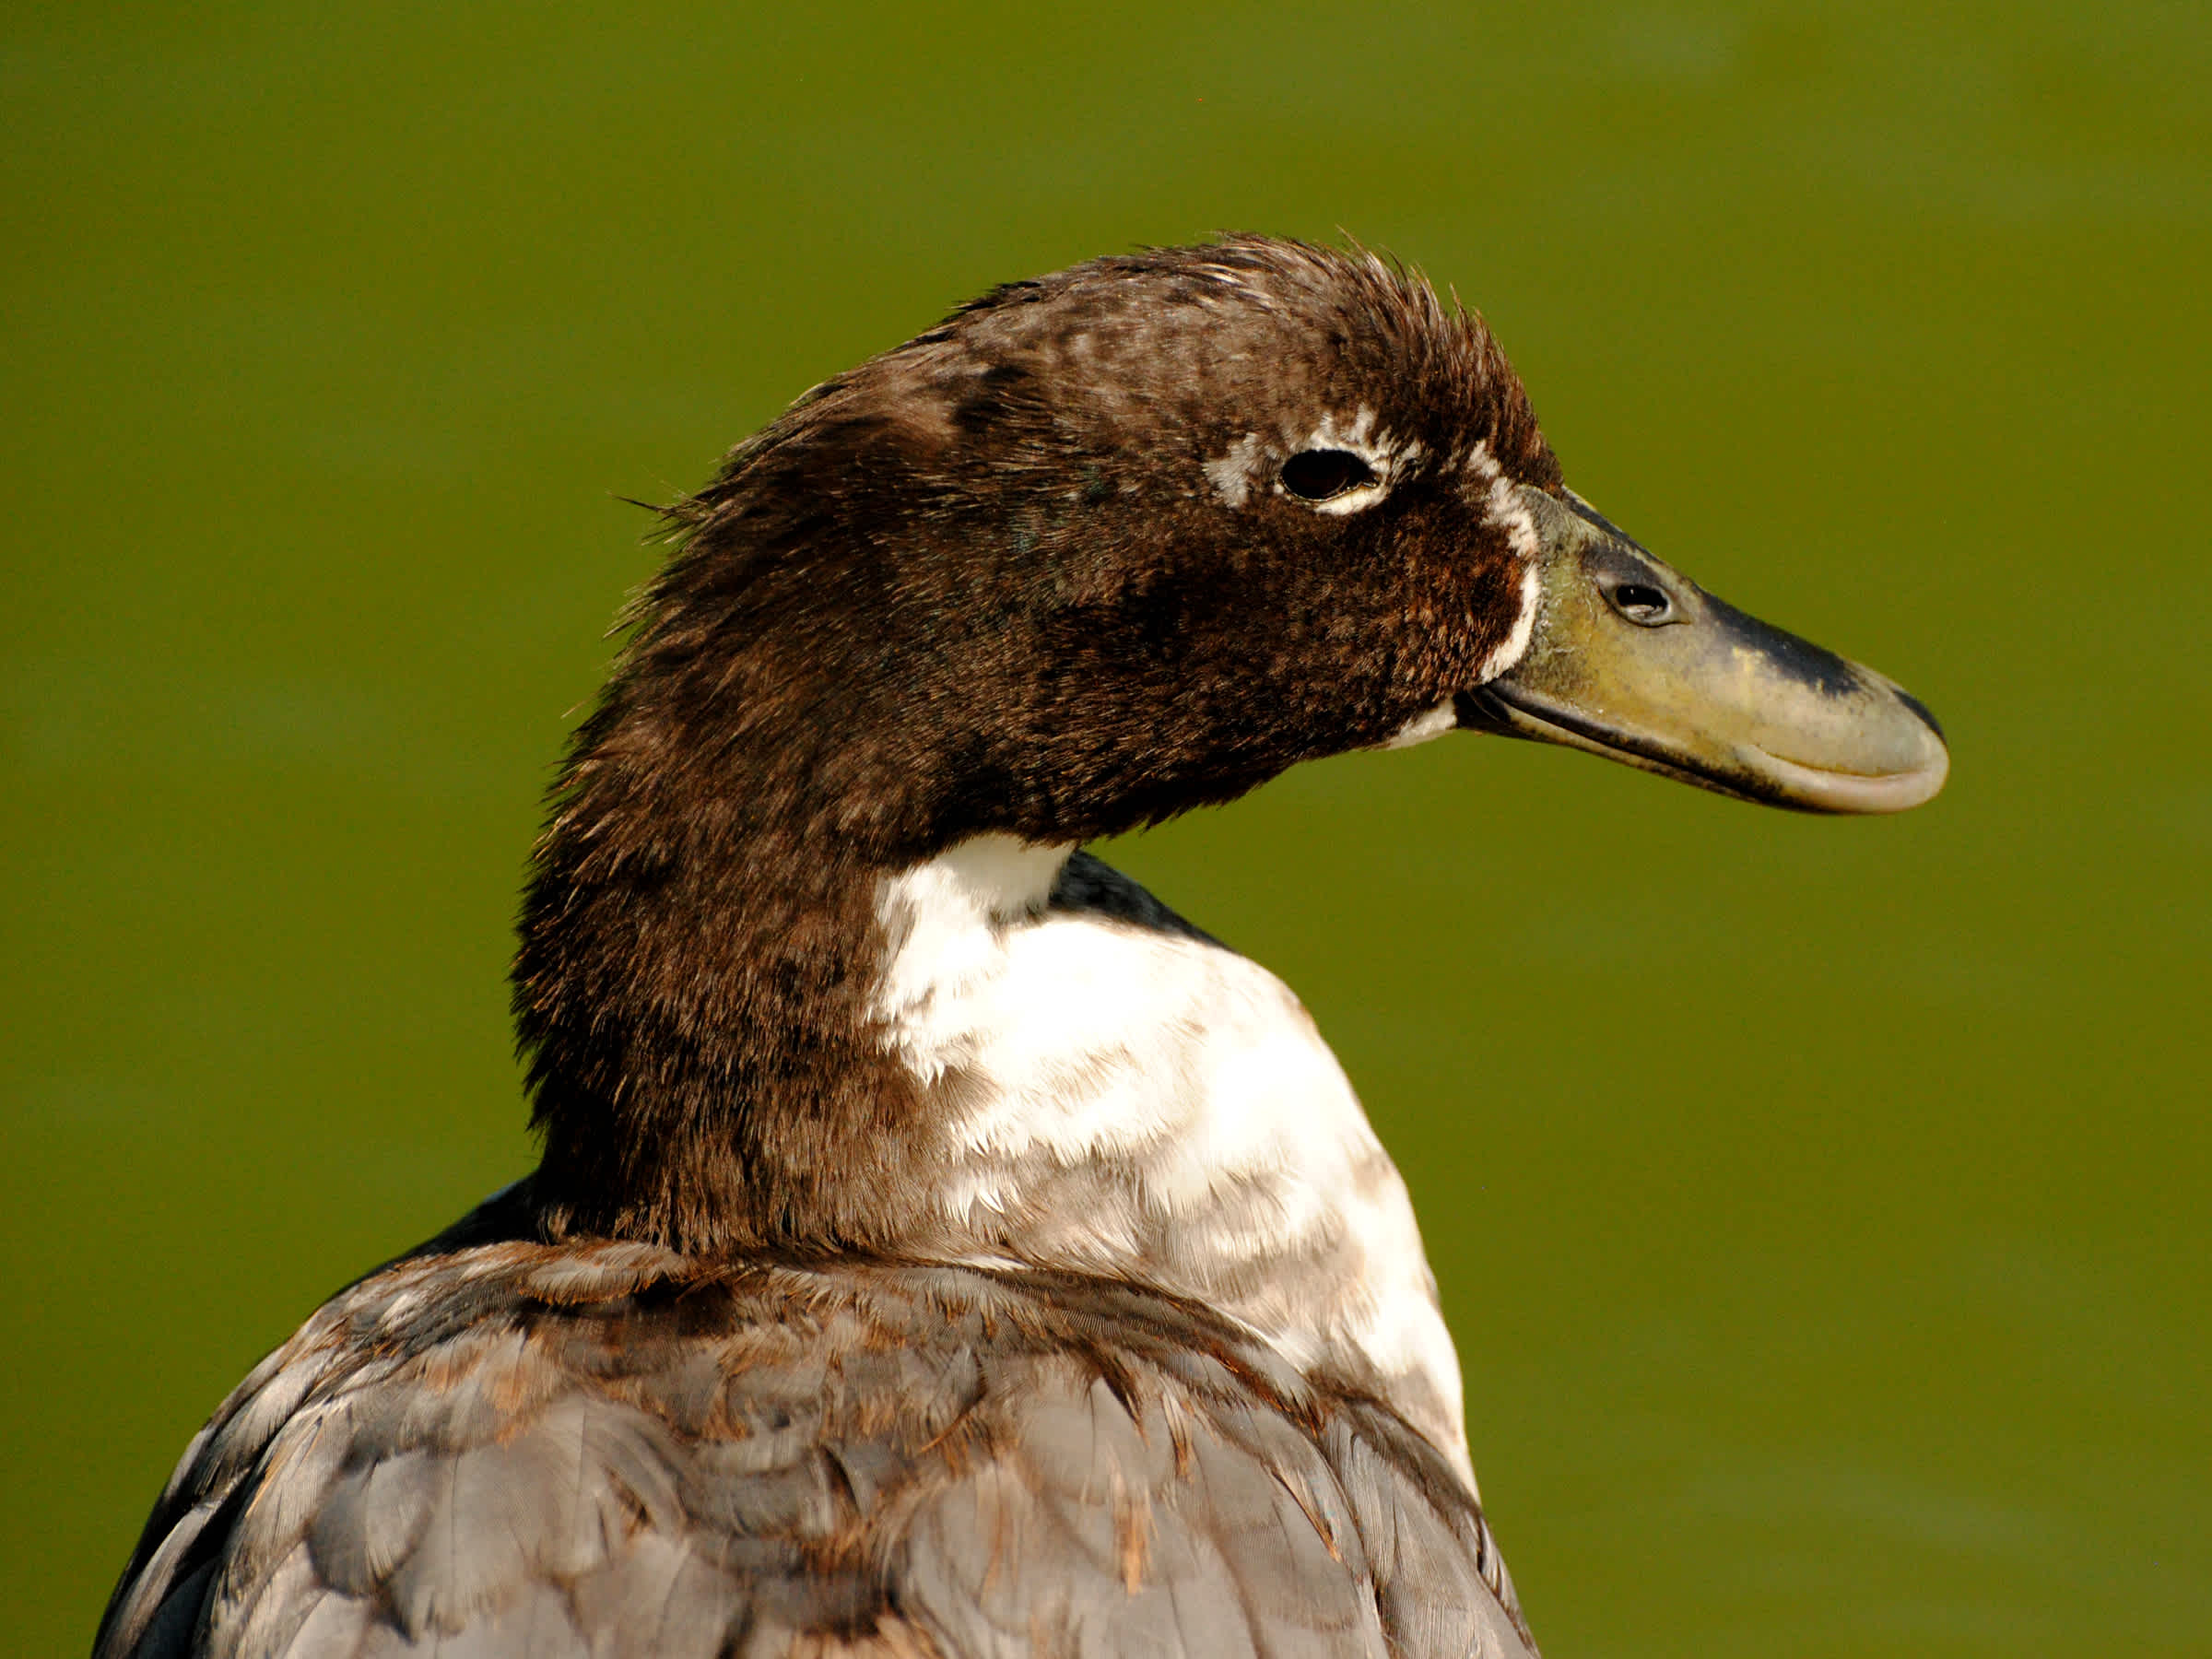 Dark brown duck in front of green background. 